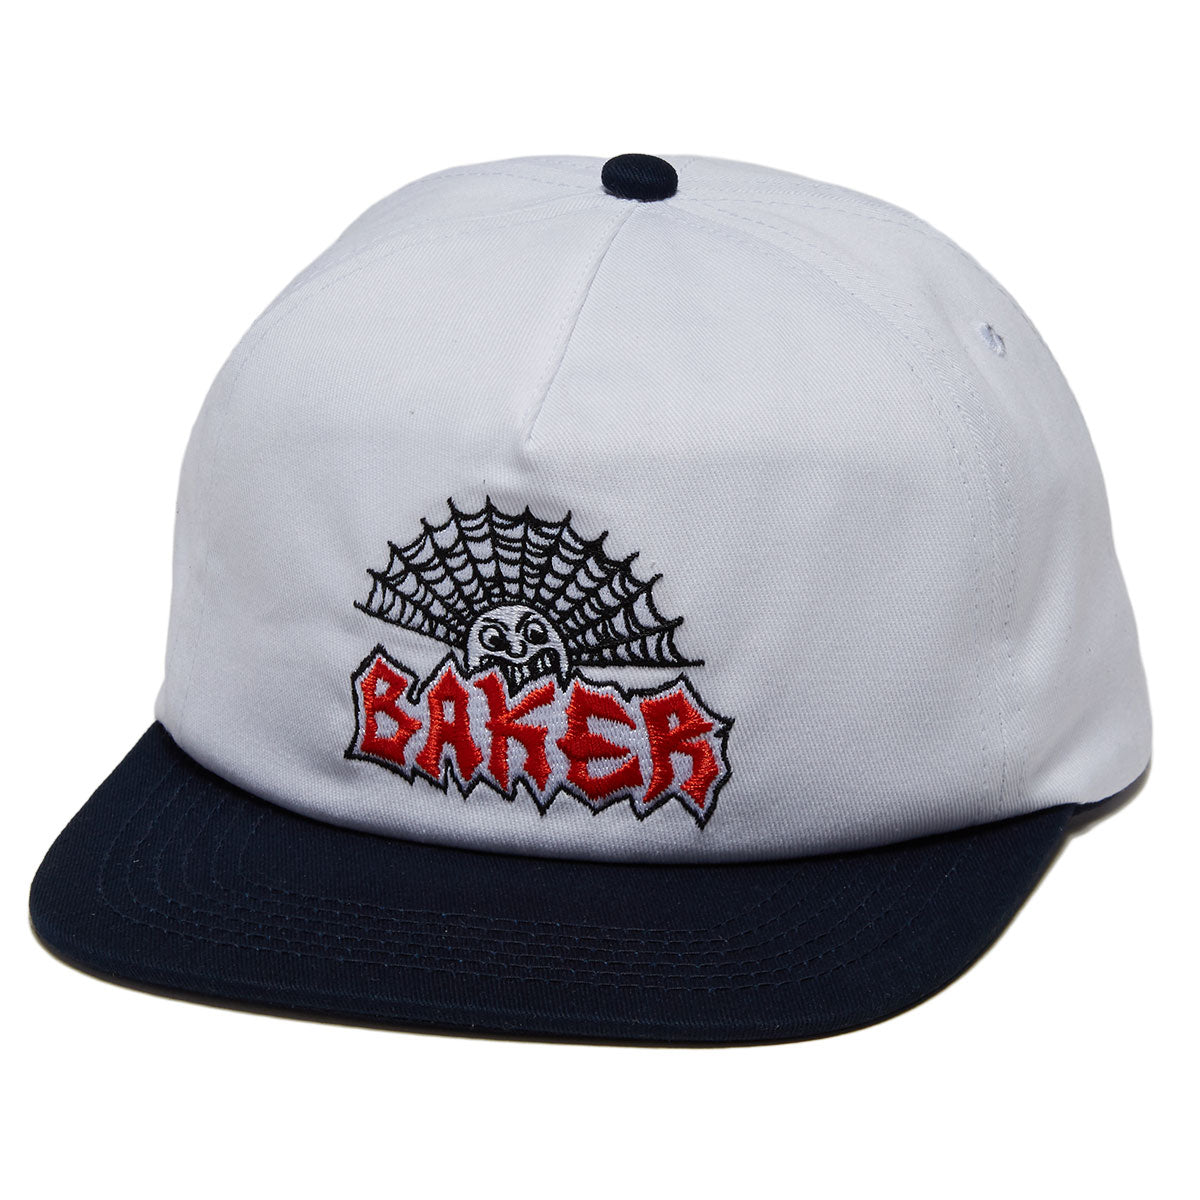 Baker Jollyman Snapback Hat - White/Navy image 1